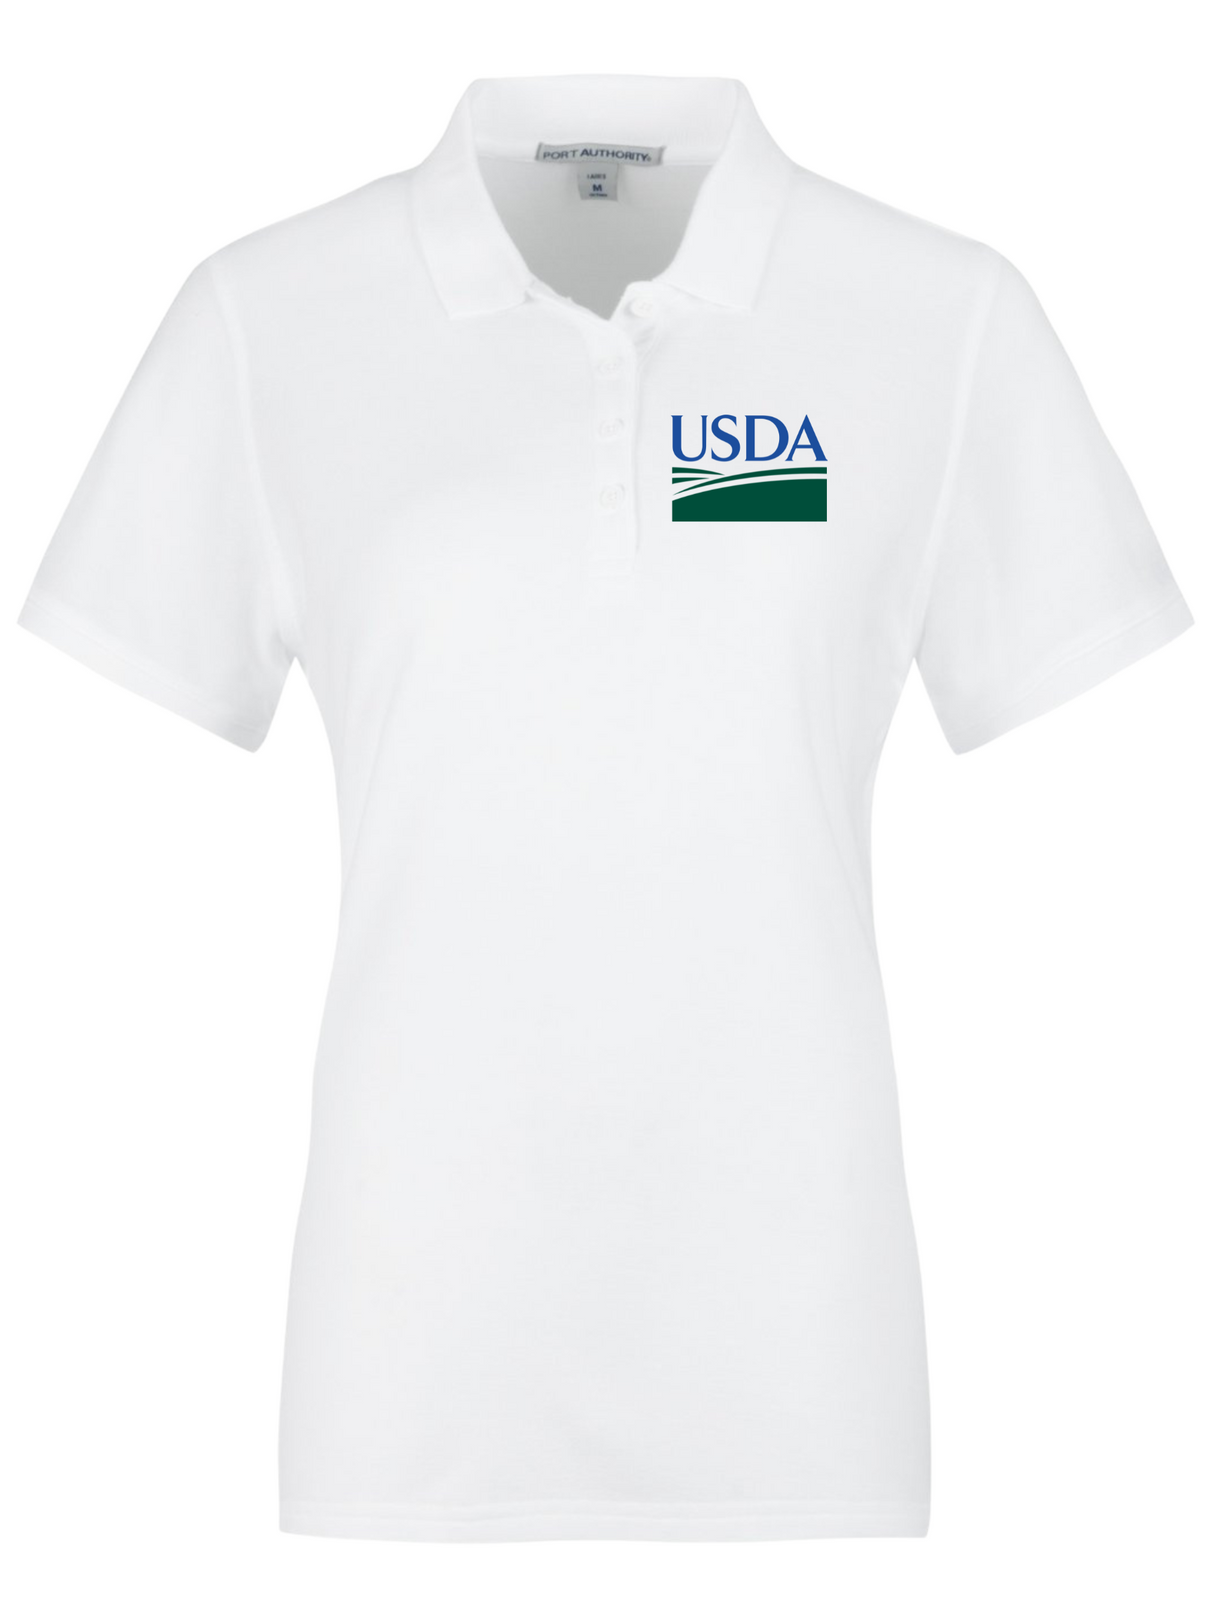 USDA Polo Shirt - Women's Short Sleeve